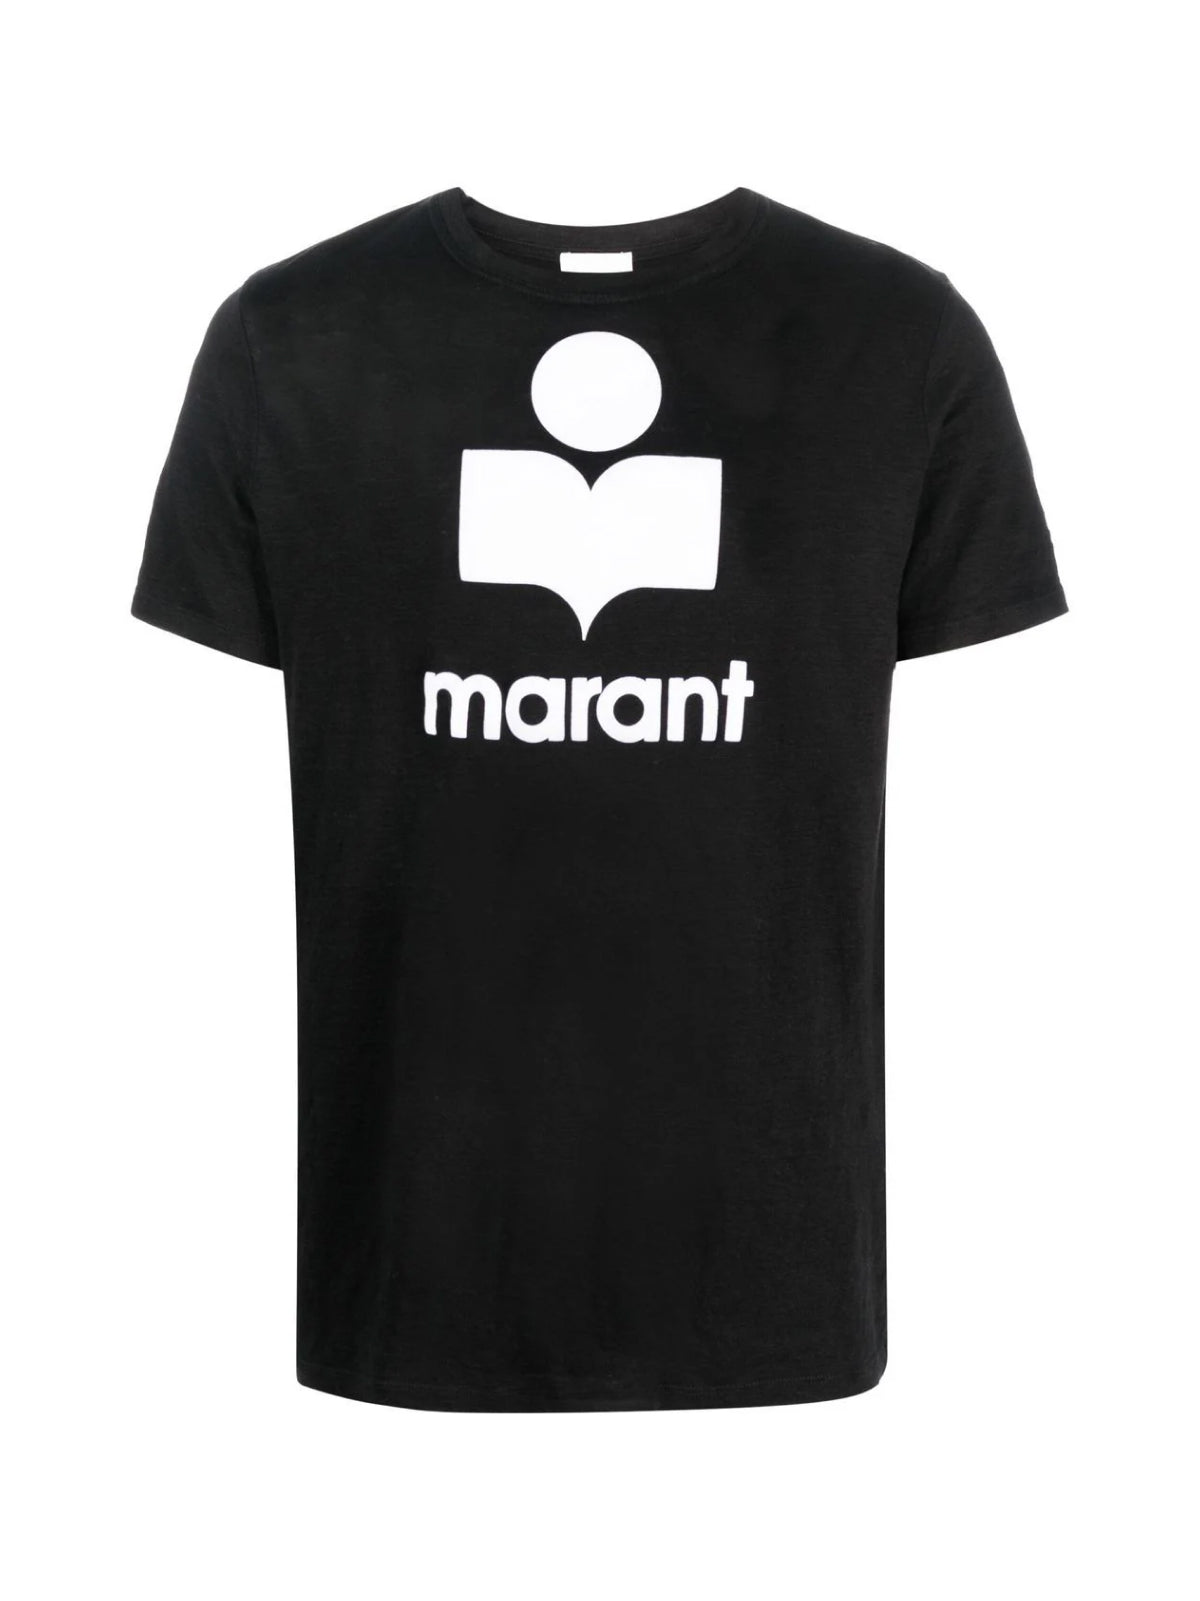 Isabel Marant-OUTLET-SALE-Karman Logo T-Shirt-ARCHIVIST